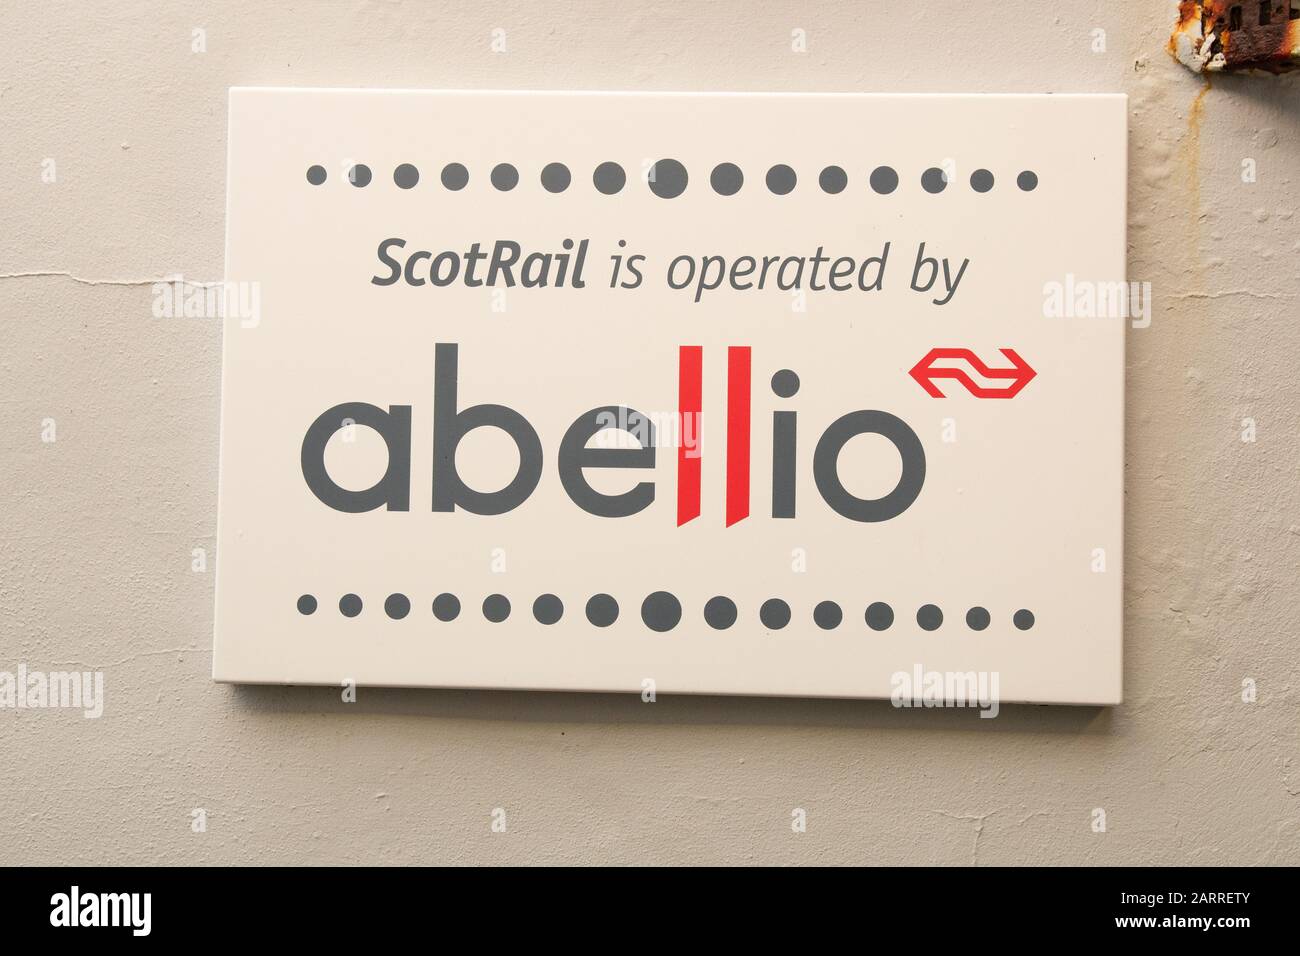 Abellio Scotrail sign - Scotland, UK Stock Photo